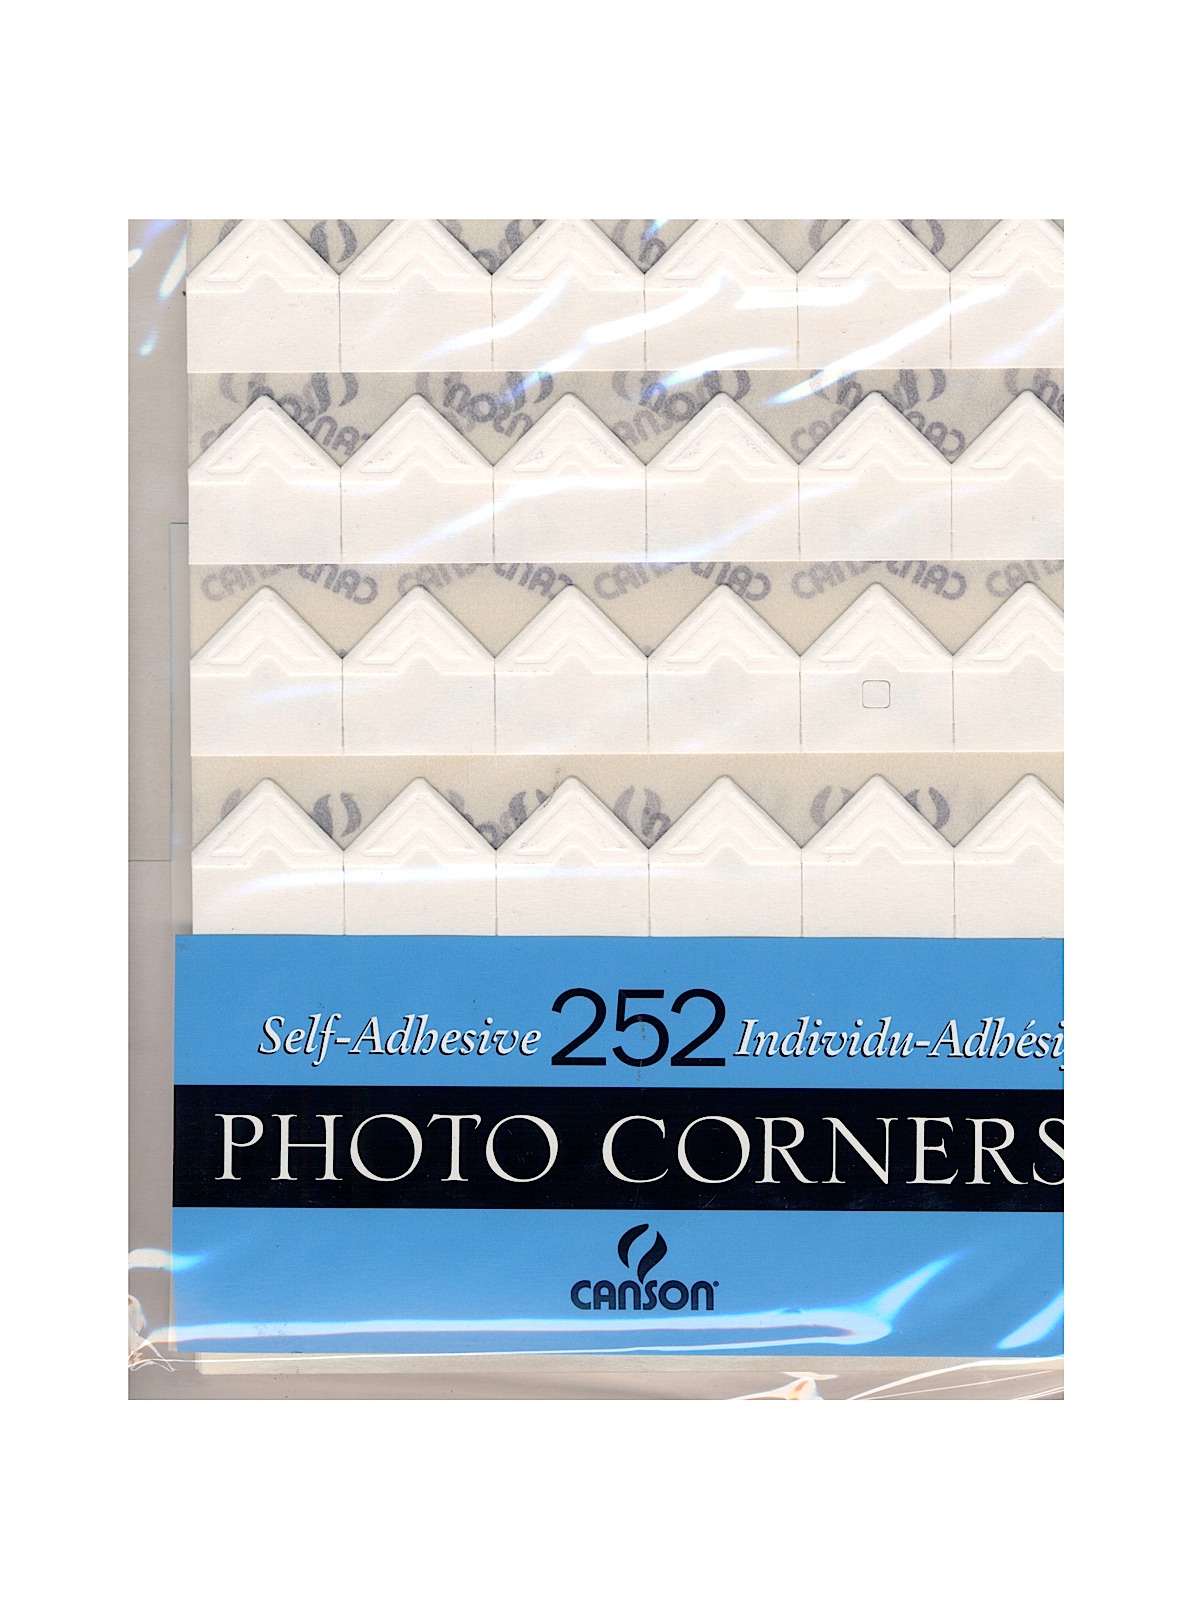 Self-Adhesive Photo Corners White